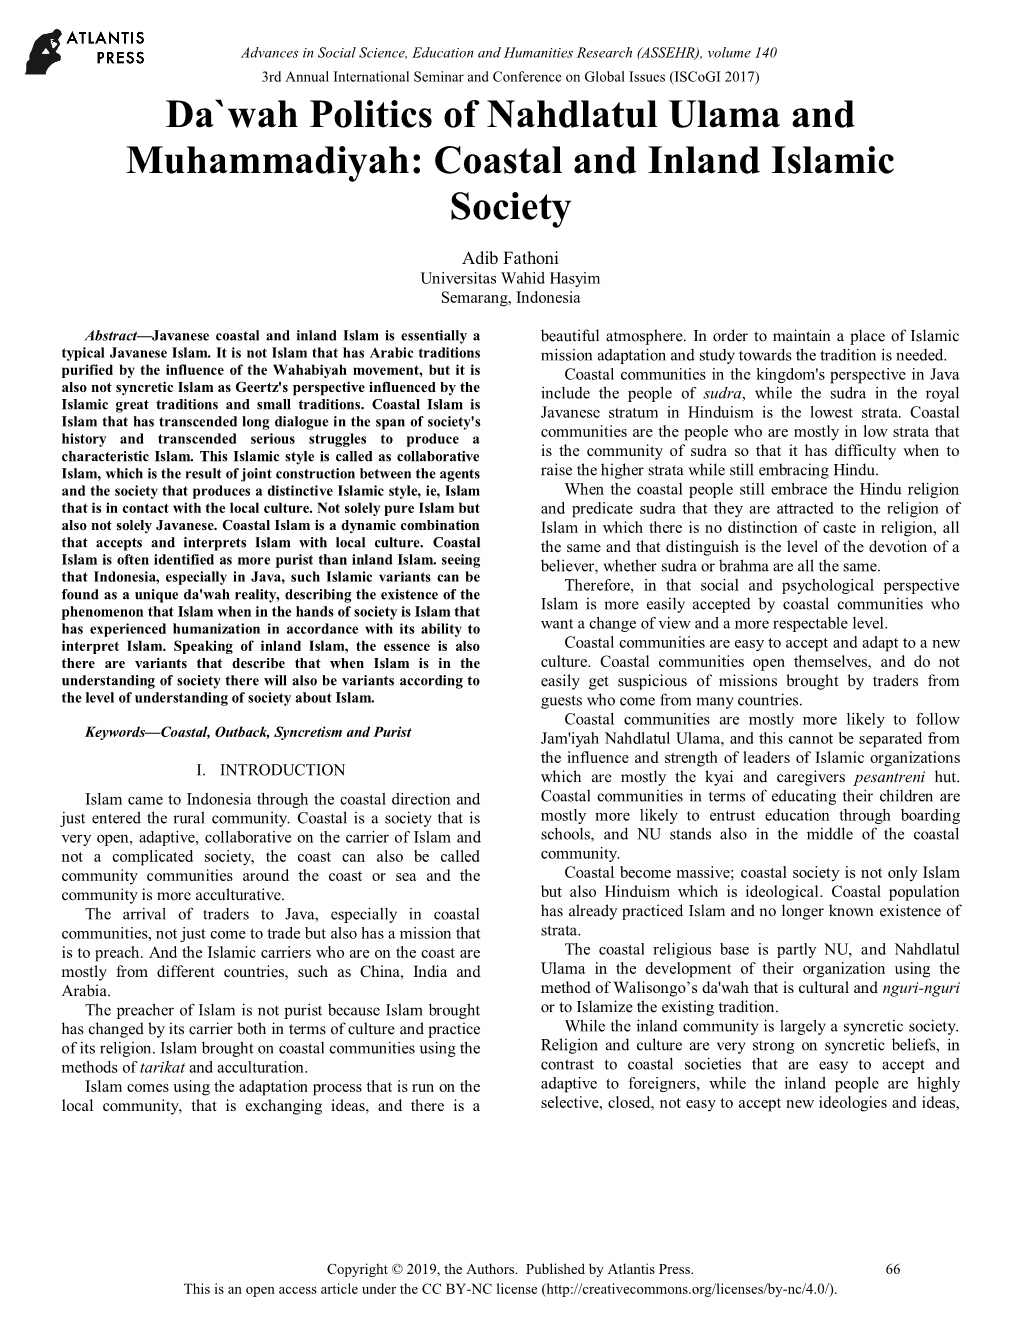 Da`Wah Politics of Nahdlatul Ulama and Muhammadiyah: Coastal and Inland Islamic